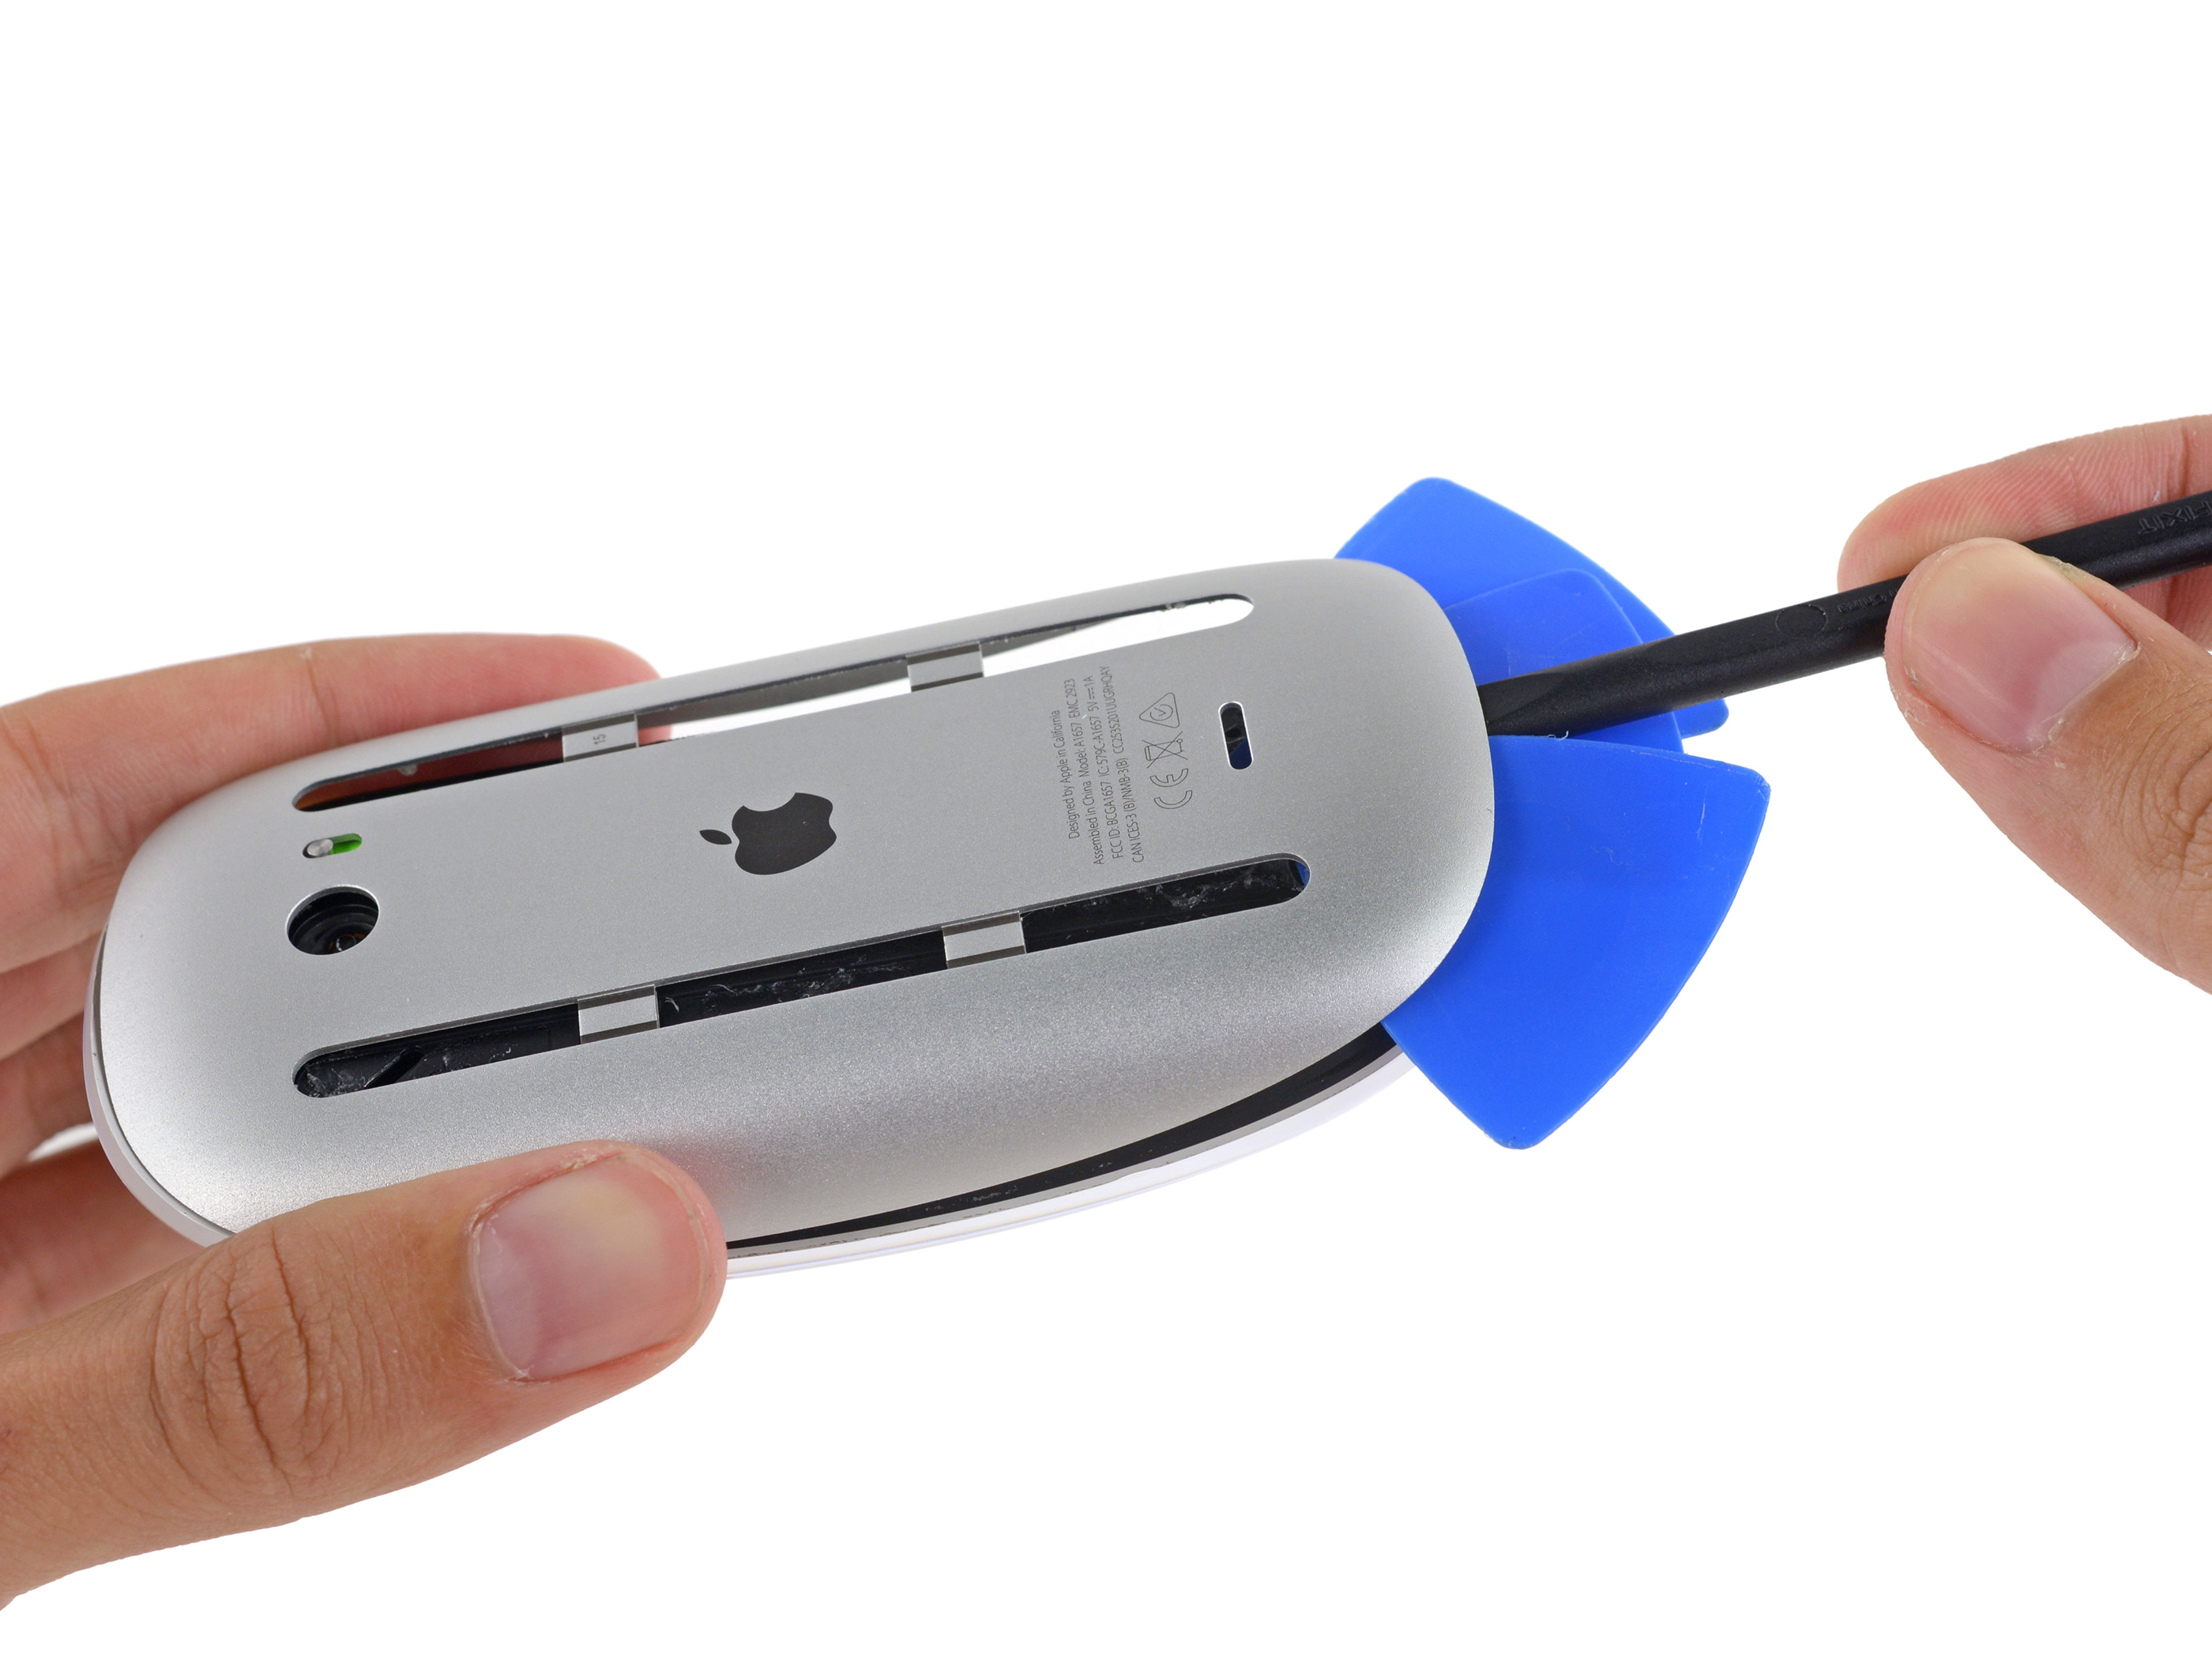 Magic Mouse 2 desmontado pela iFixit